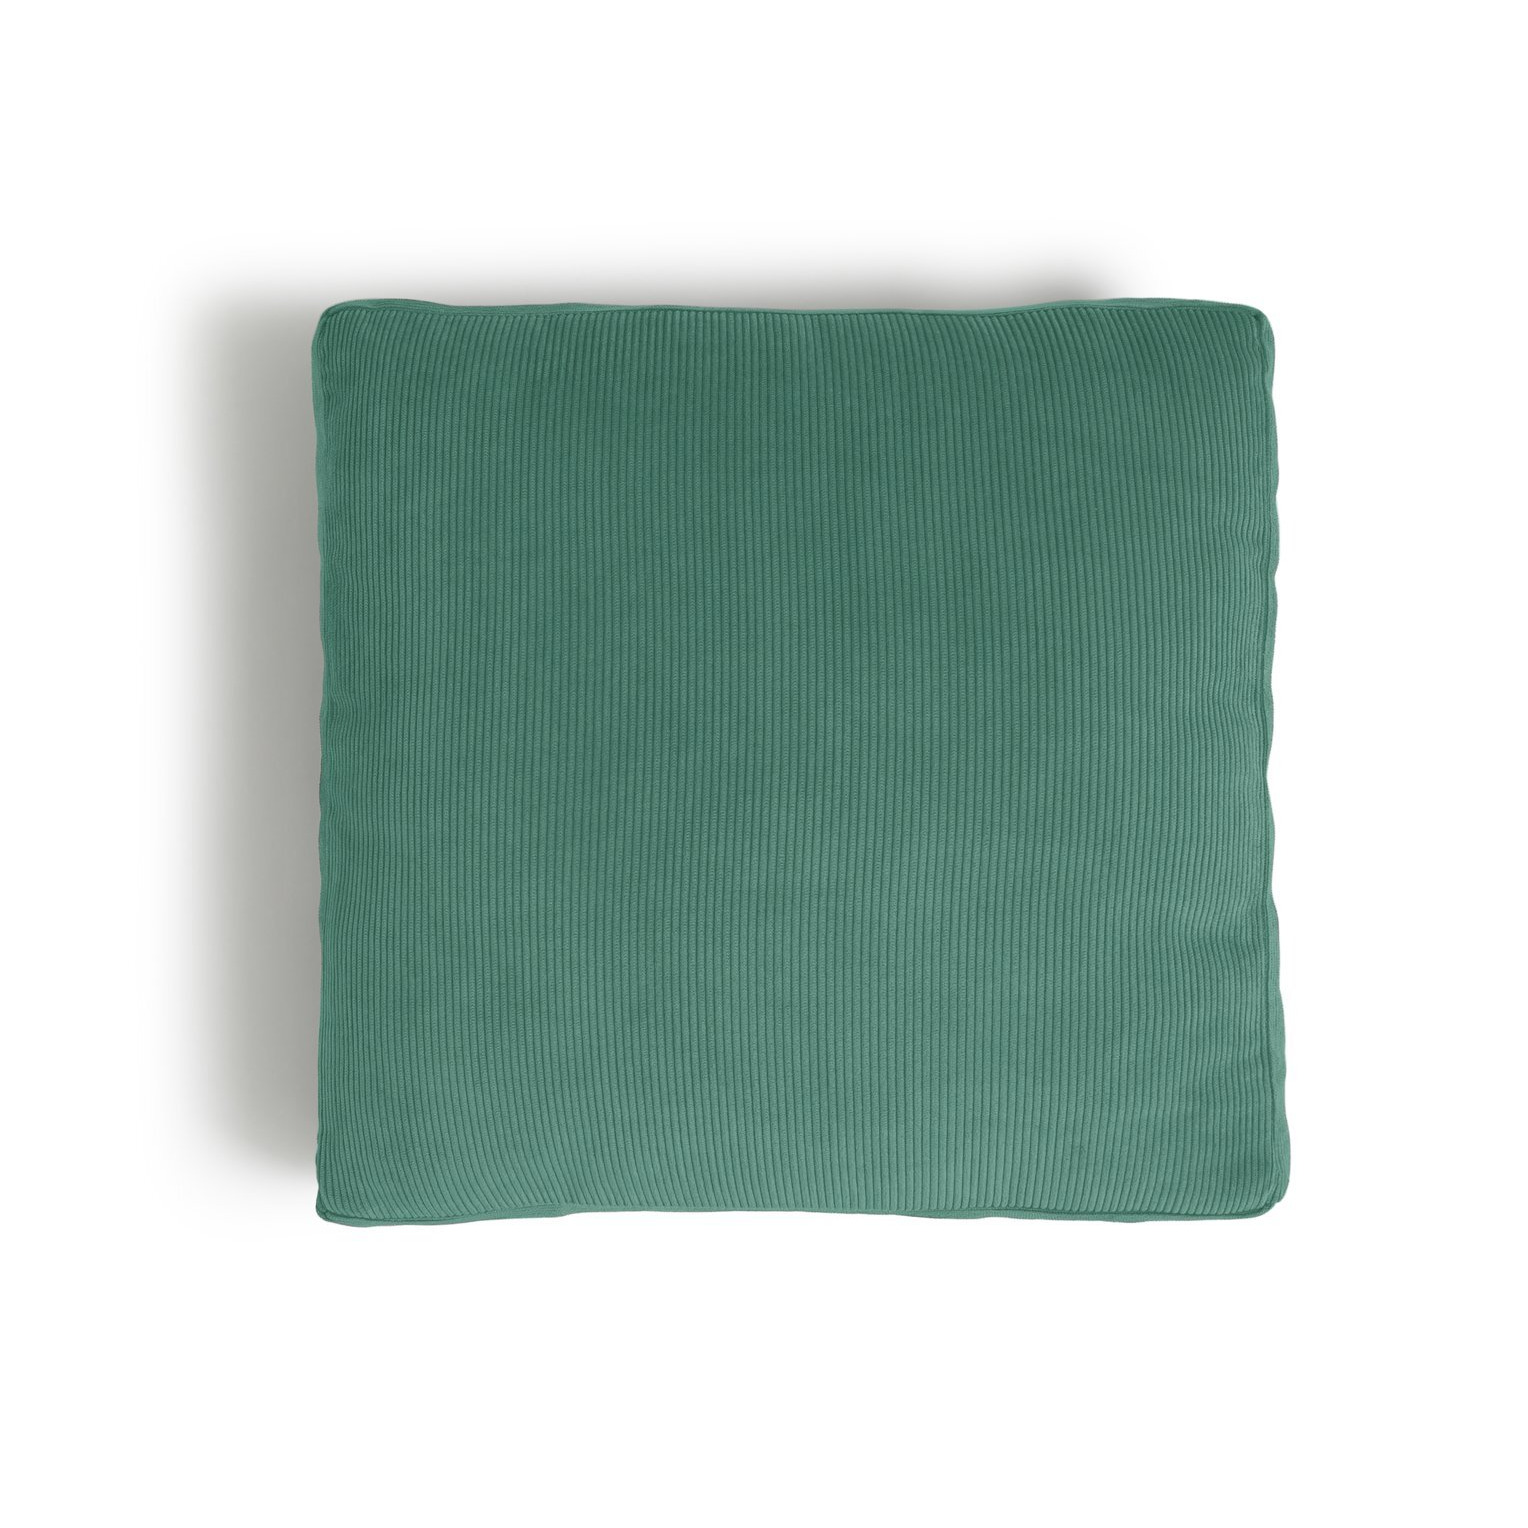 Habitat Cord Cushion Cover - Green - 50x50cm - image 1